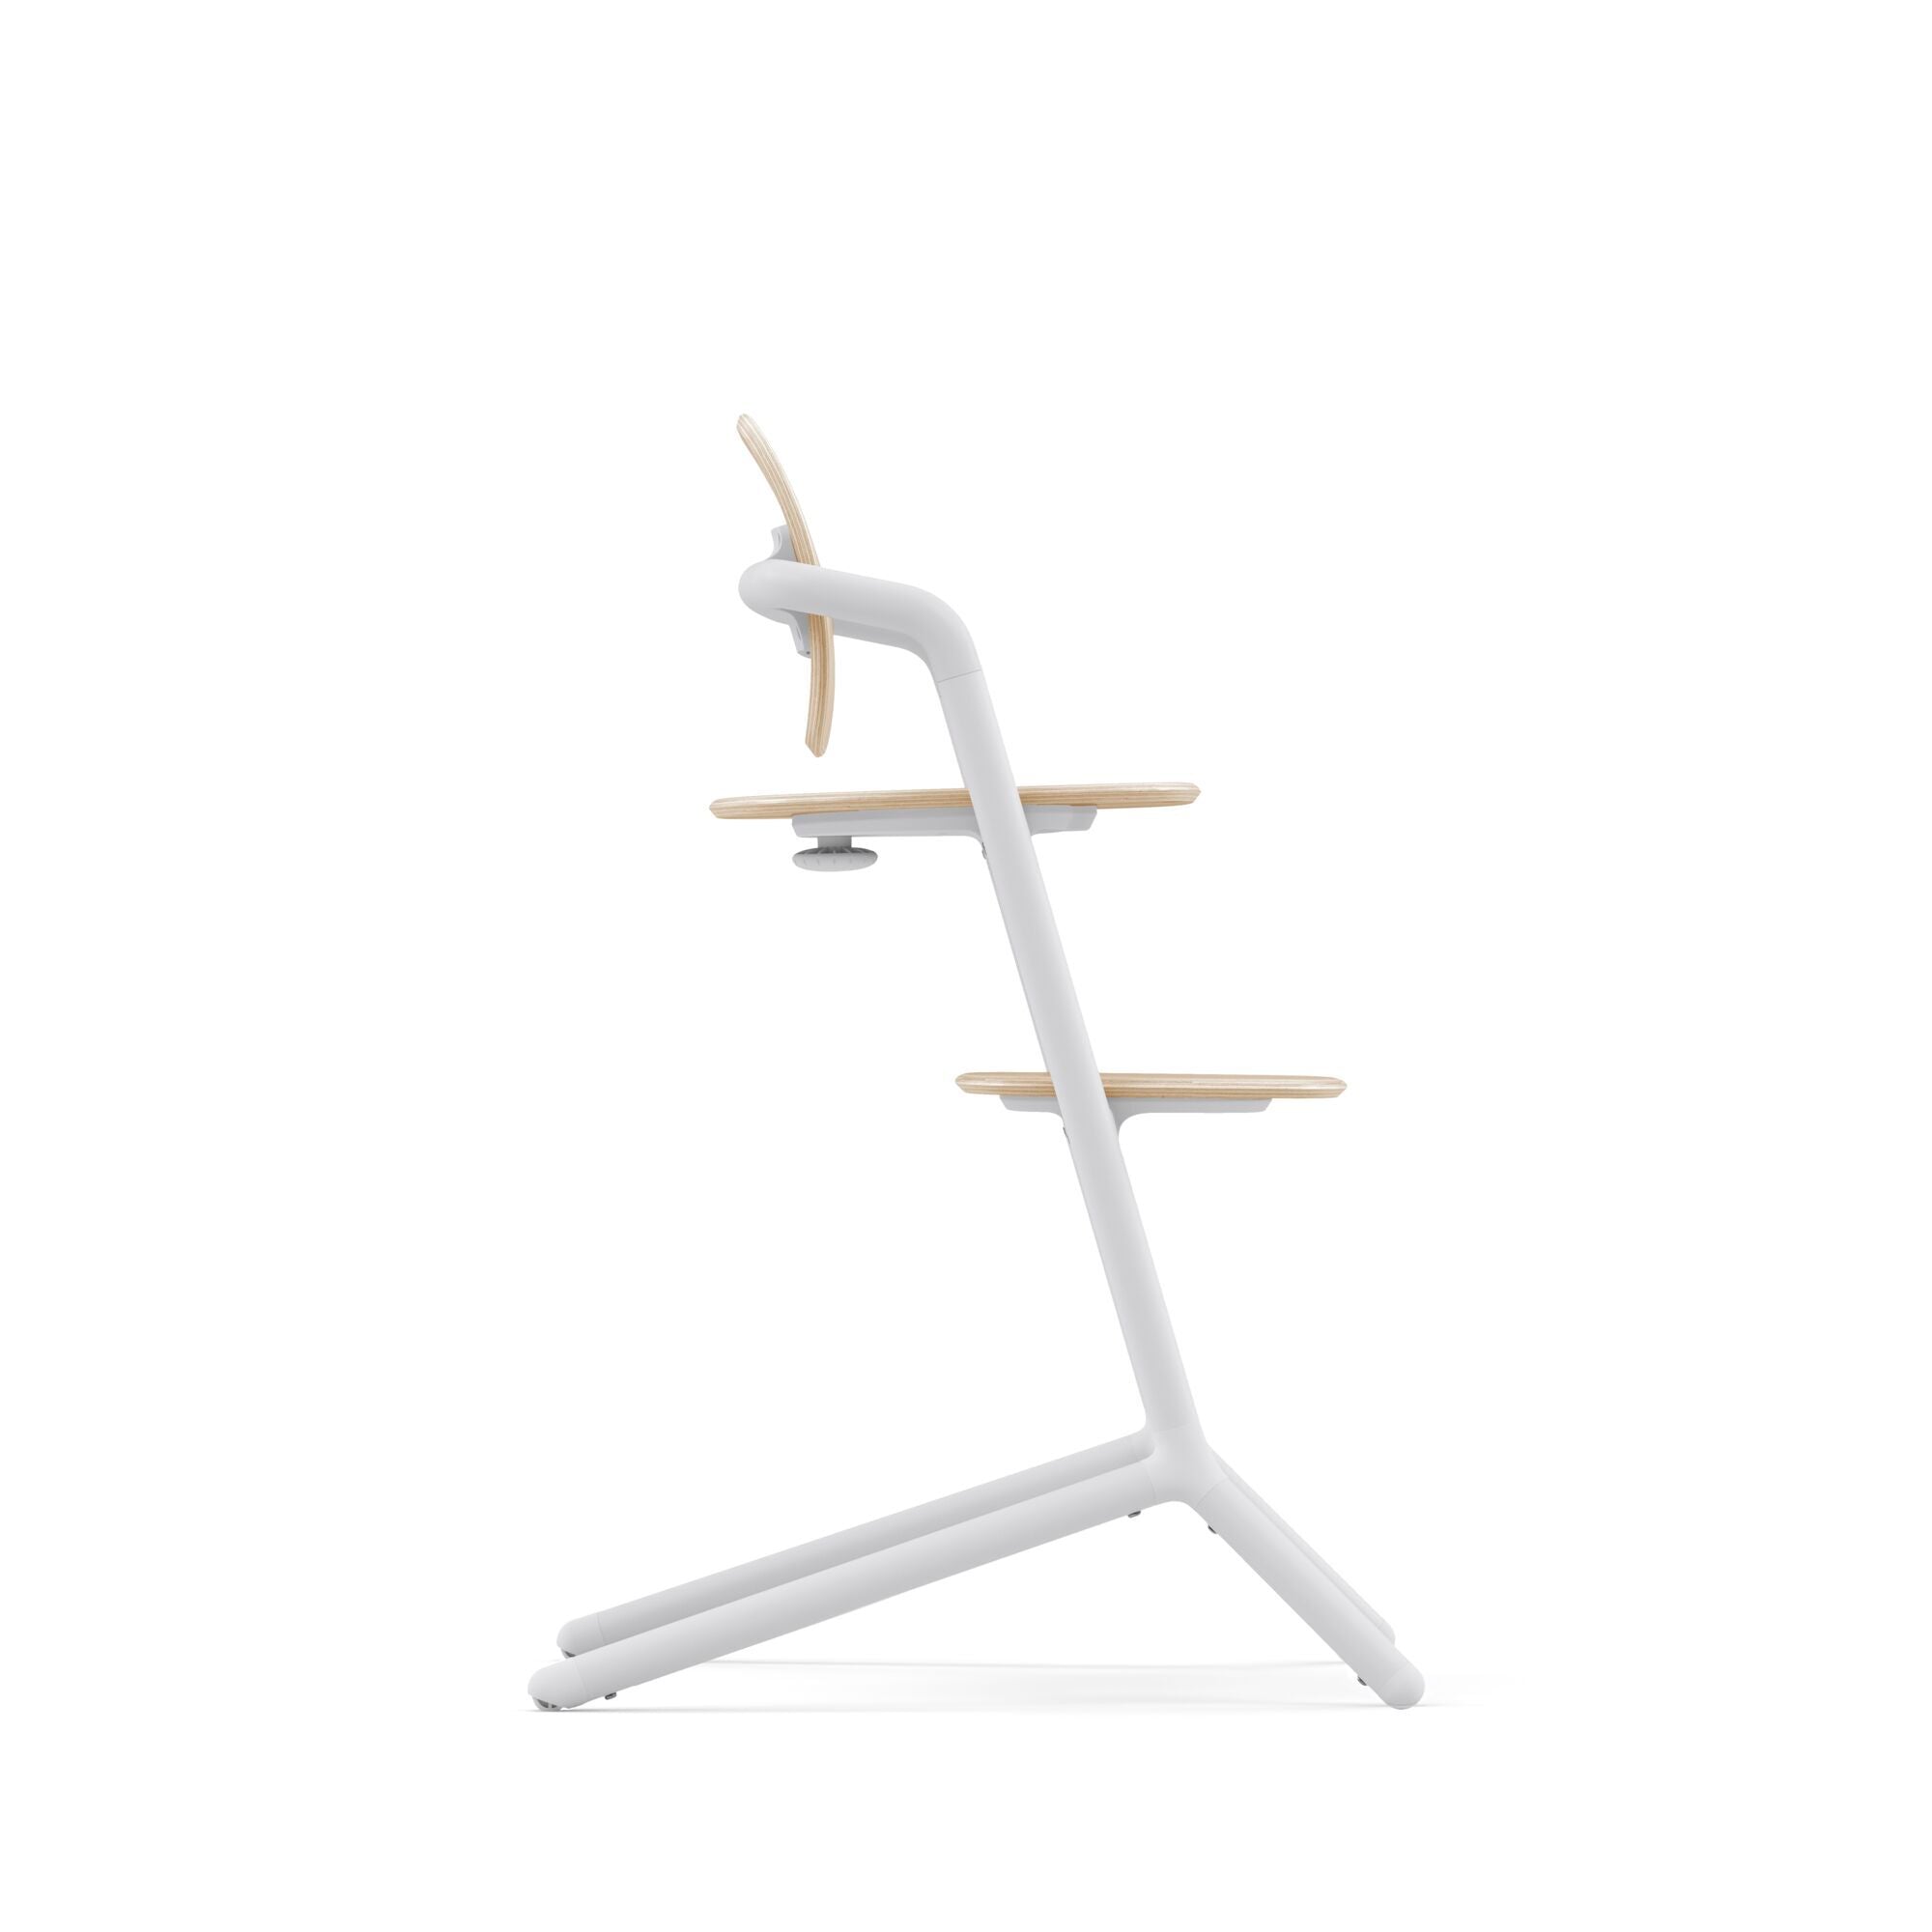 Cybex Lemo 2 High Chair - ANB Baby -4063846311286$100 - $300